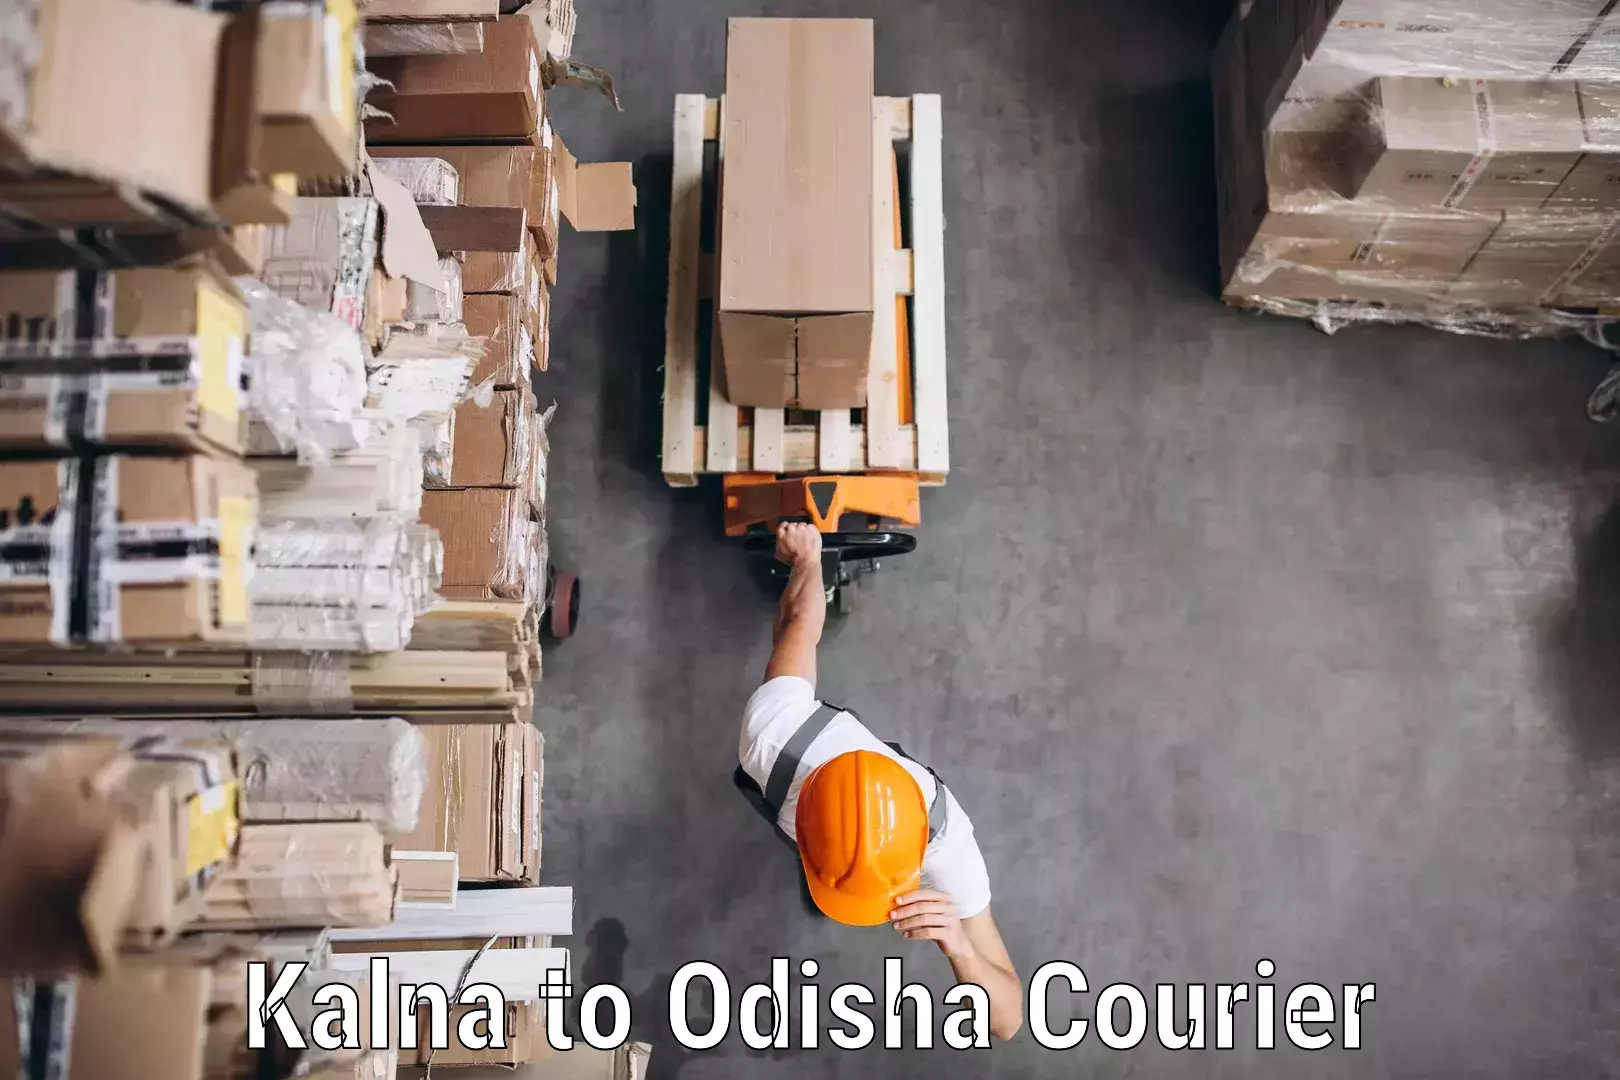 Seamless shipping experience in Kalna to Odisha